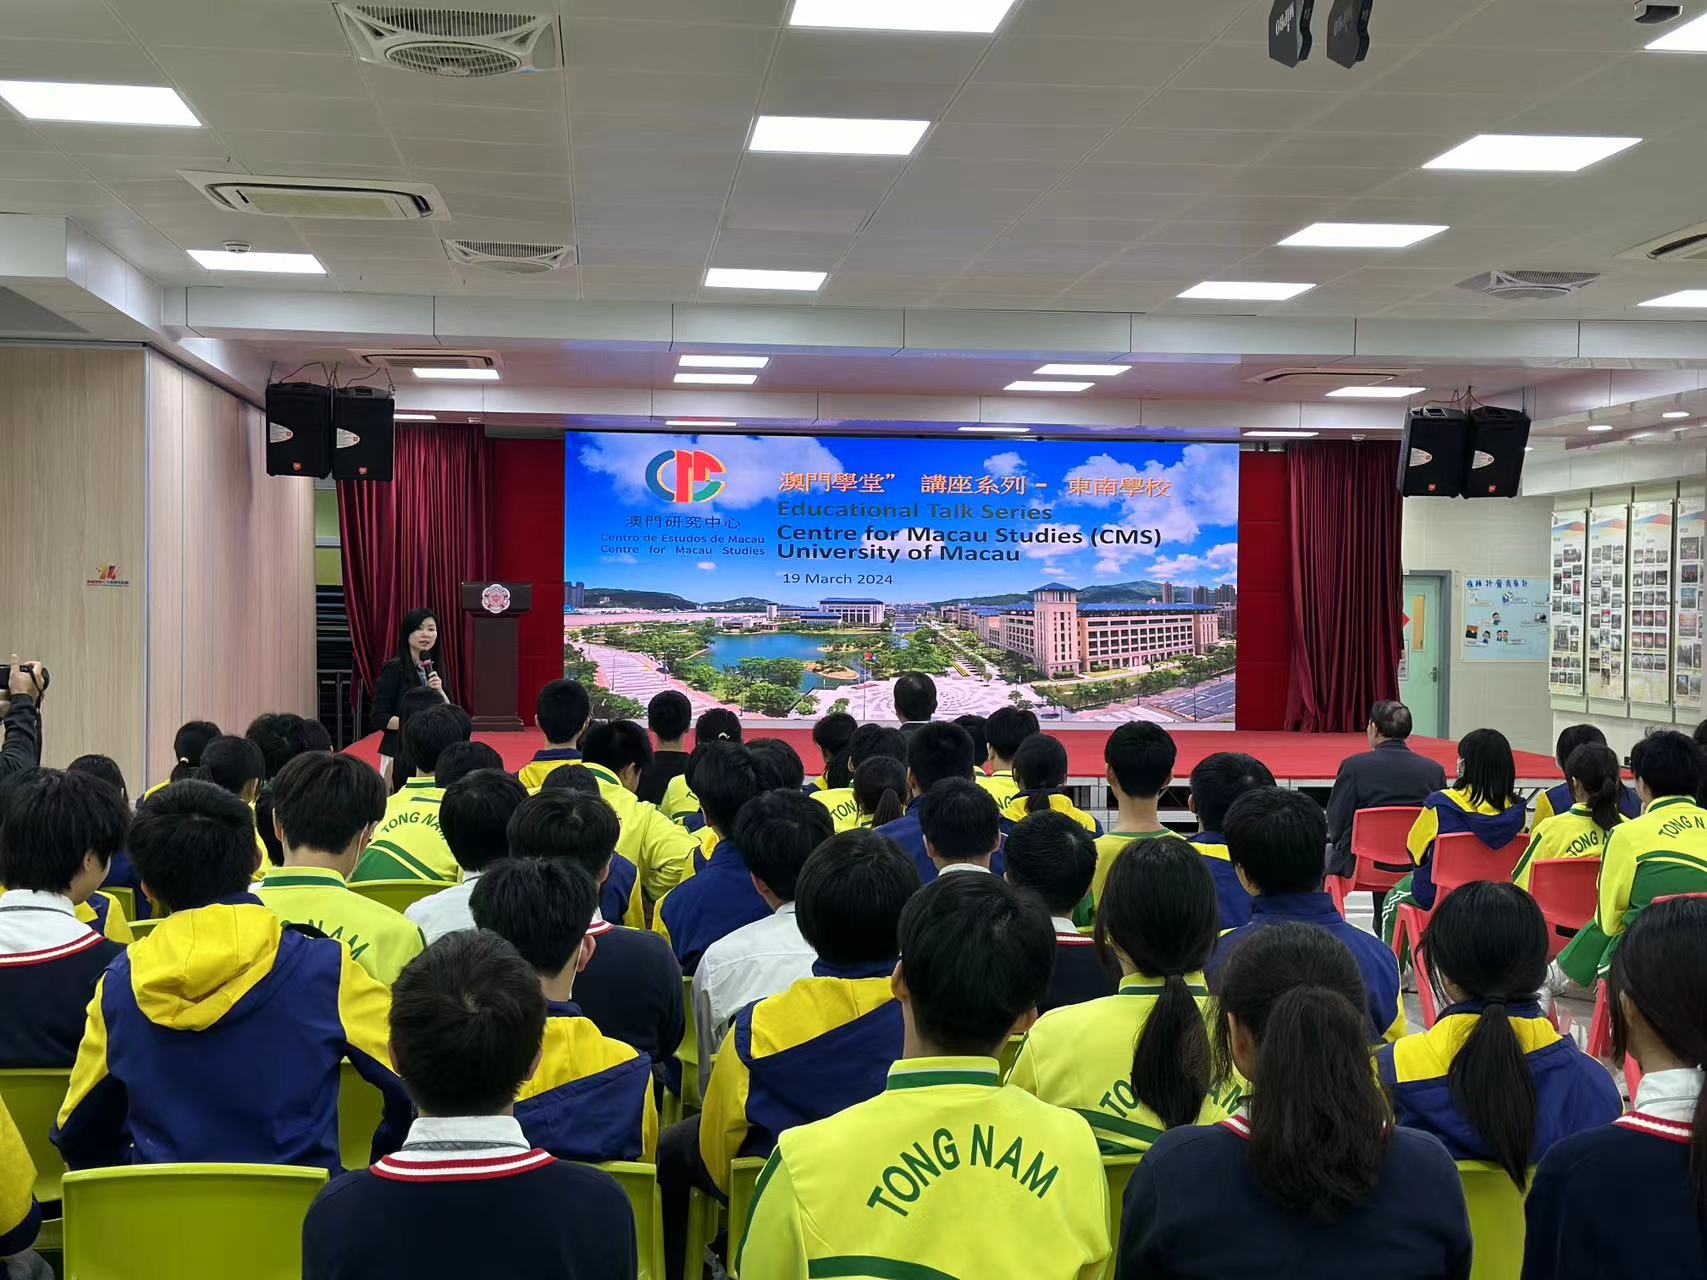 介紹澳門大學 
Sharing about University of Macau
